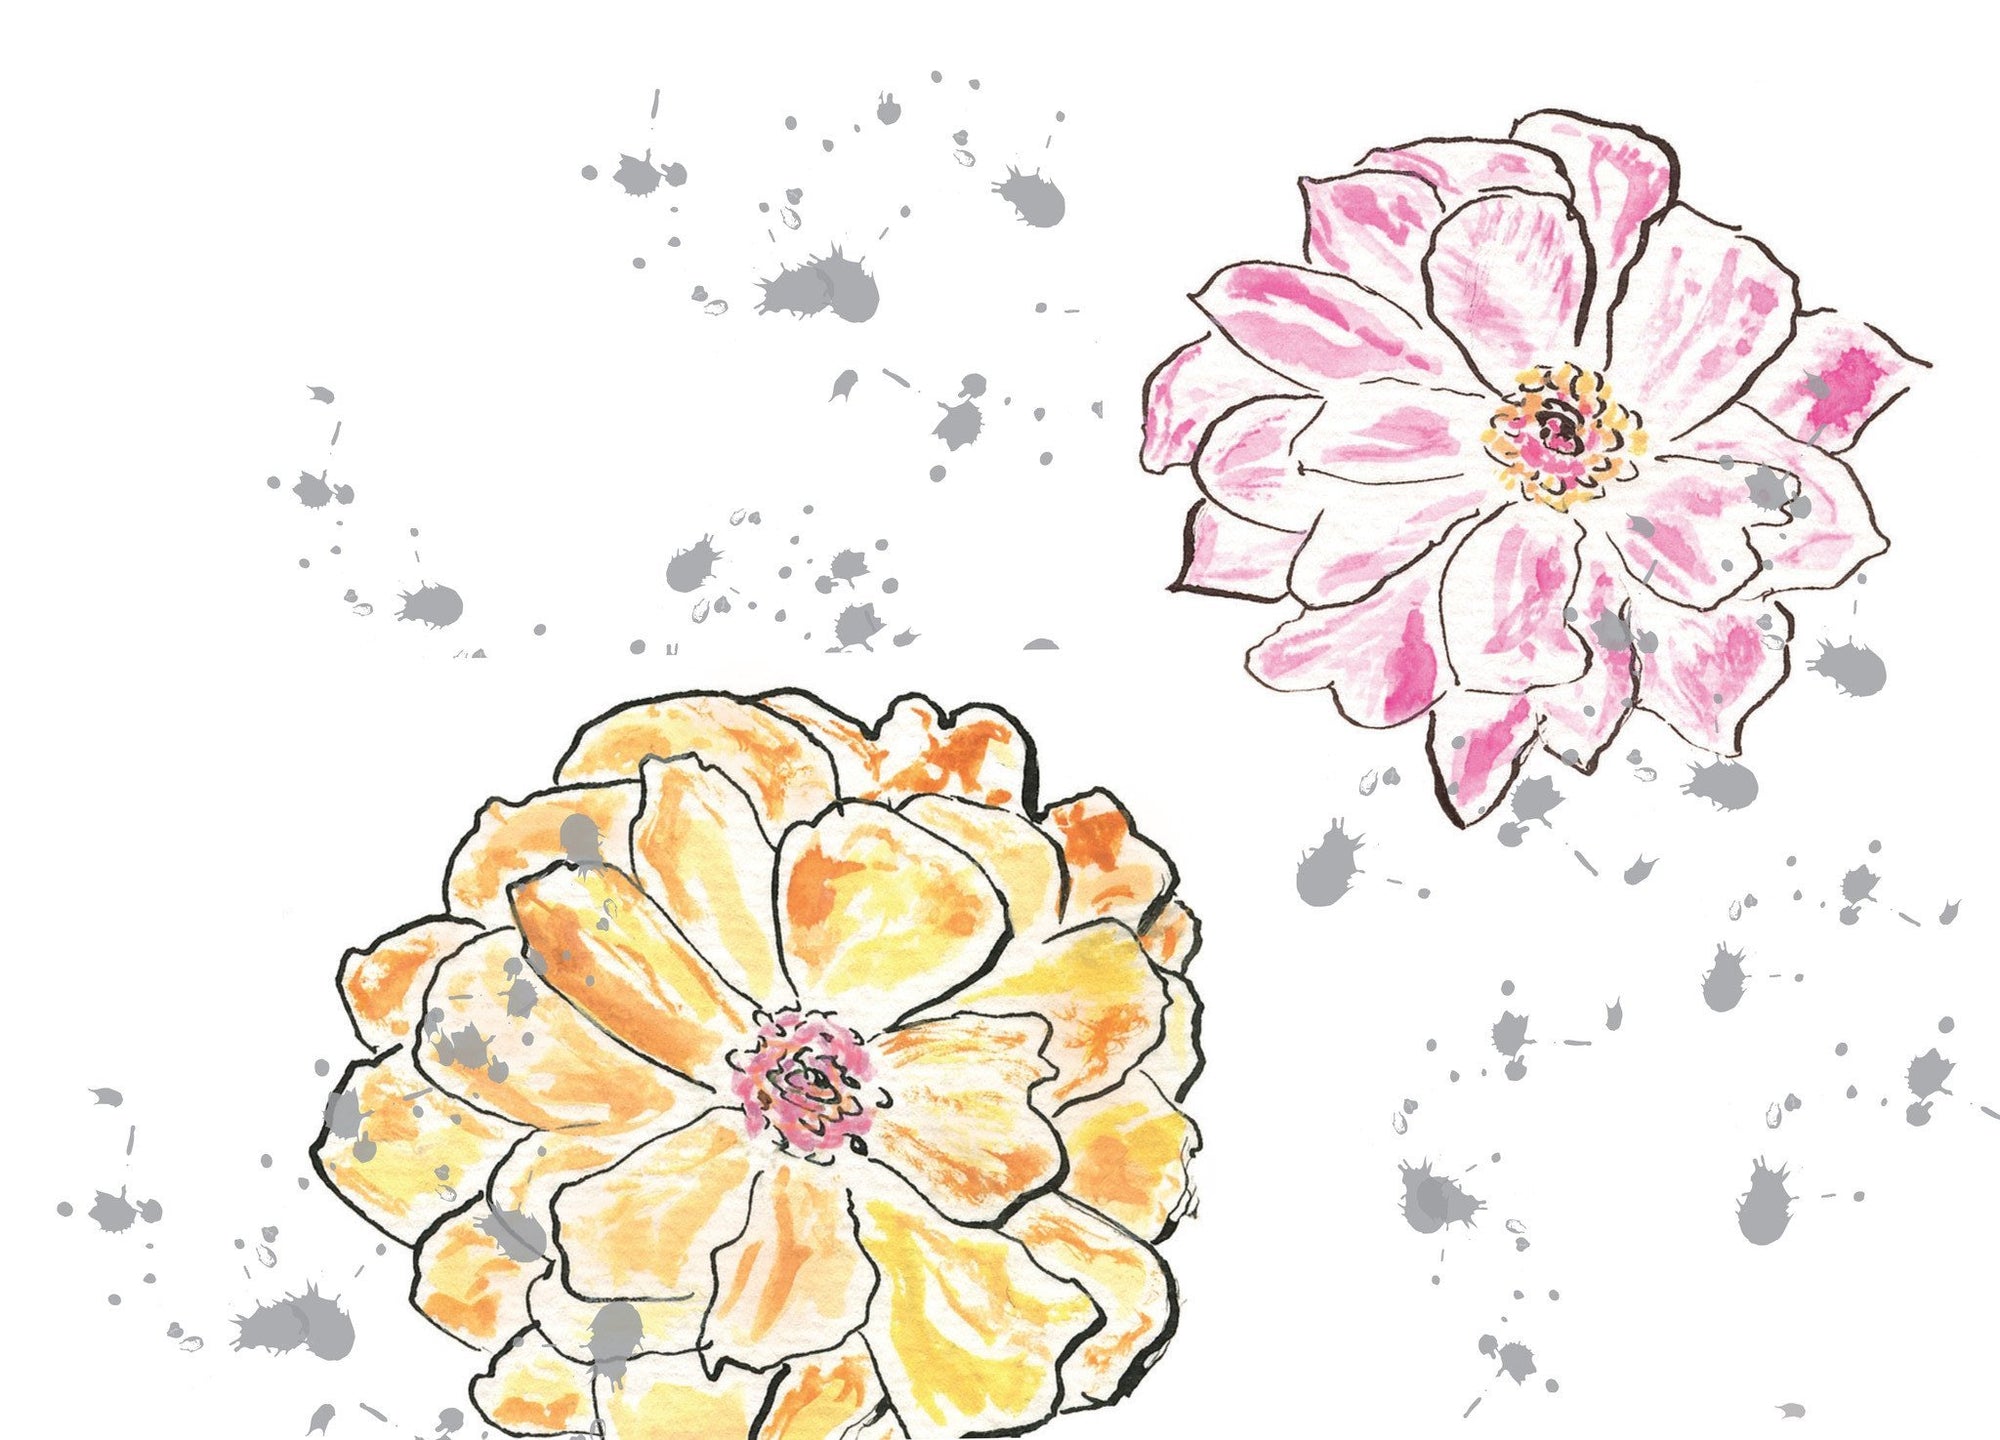 Sunburst Flowers Blank Card - Dreams After All